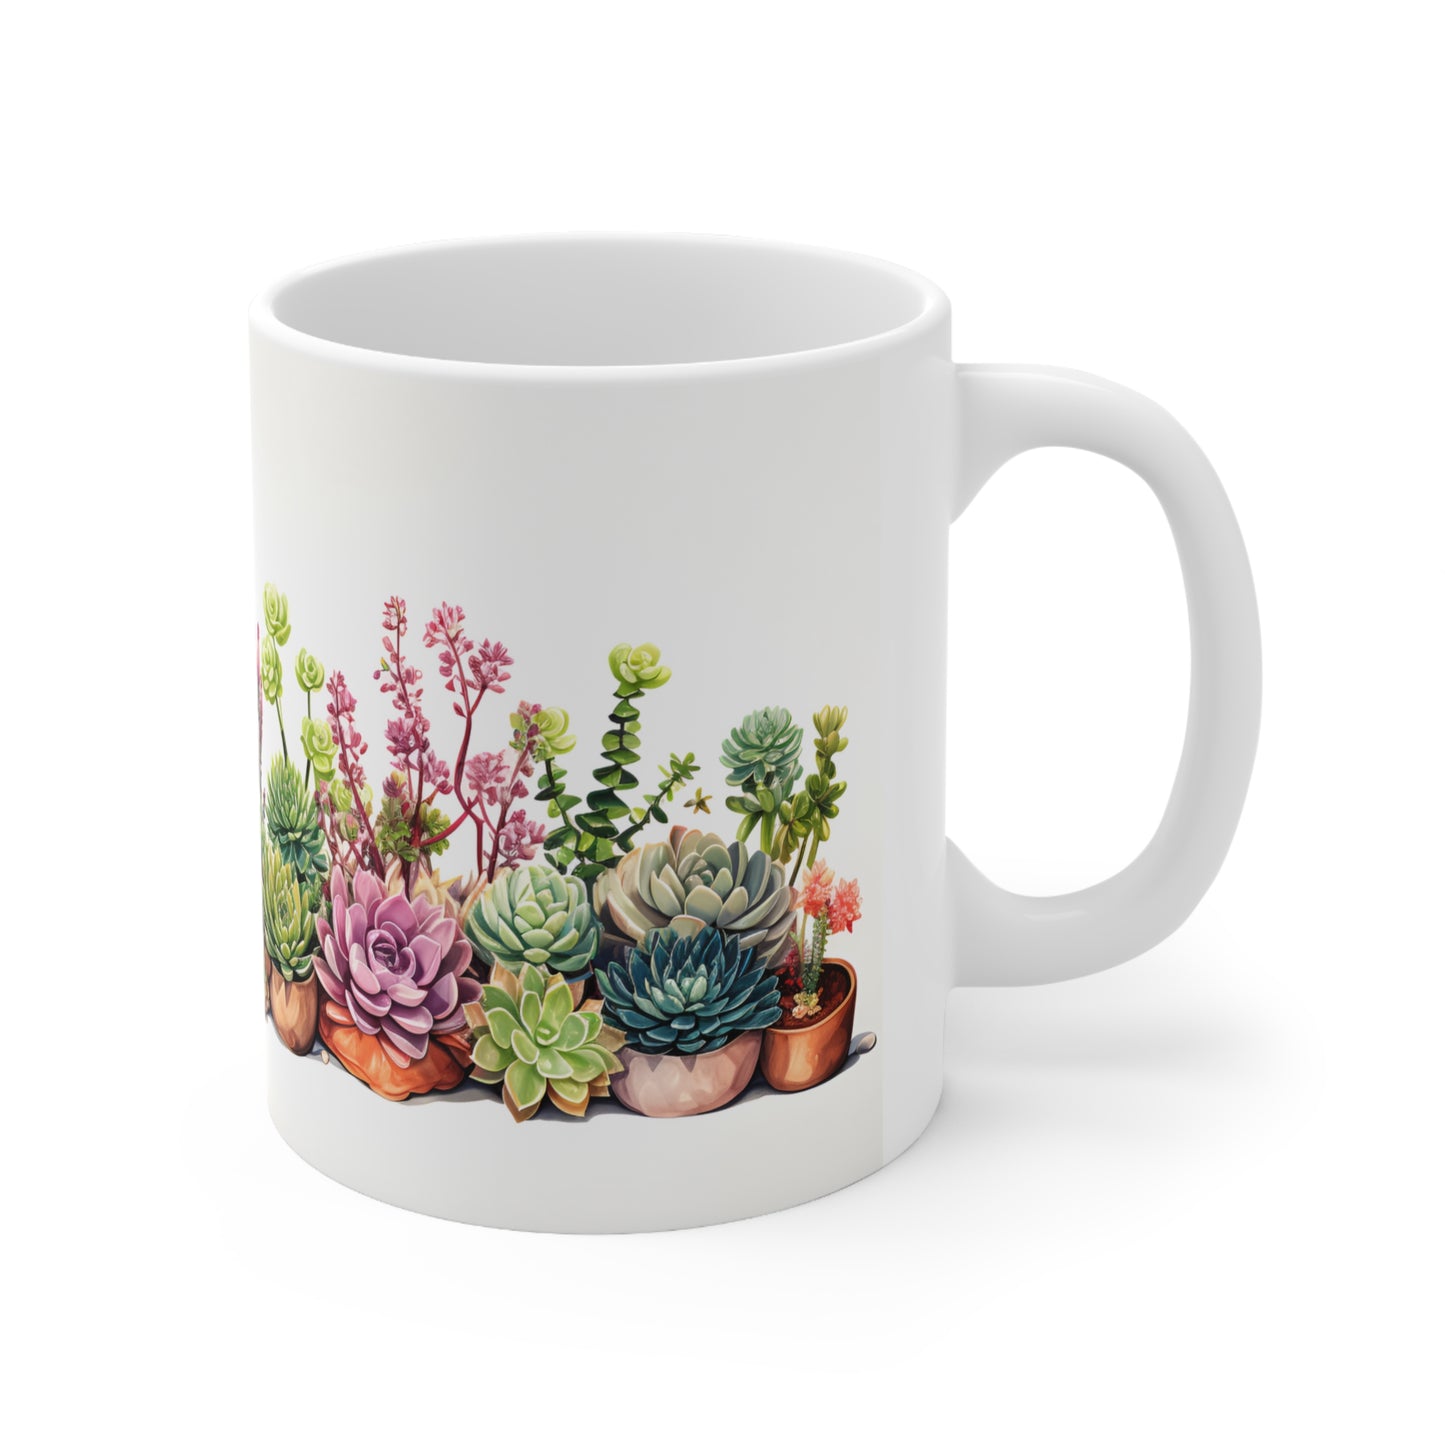 Potted Succulent Plants Mug  - 11 oz Ceramic Coffee Mug